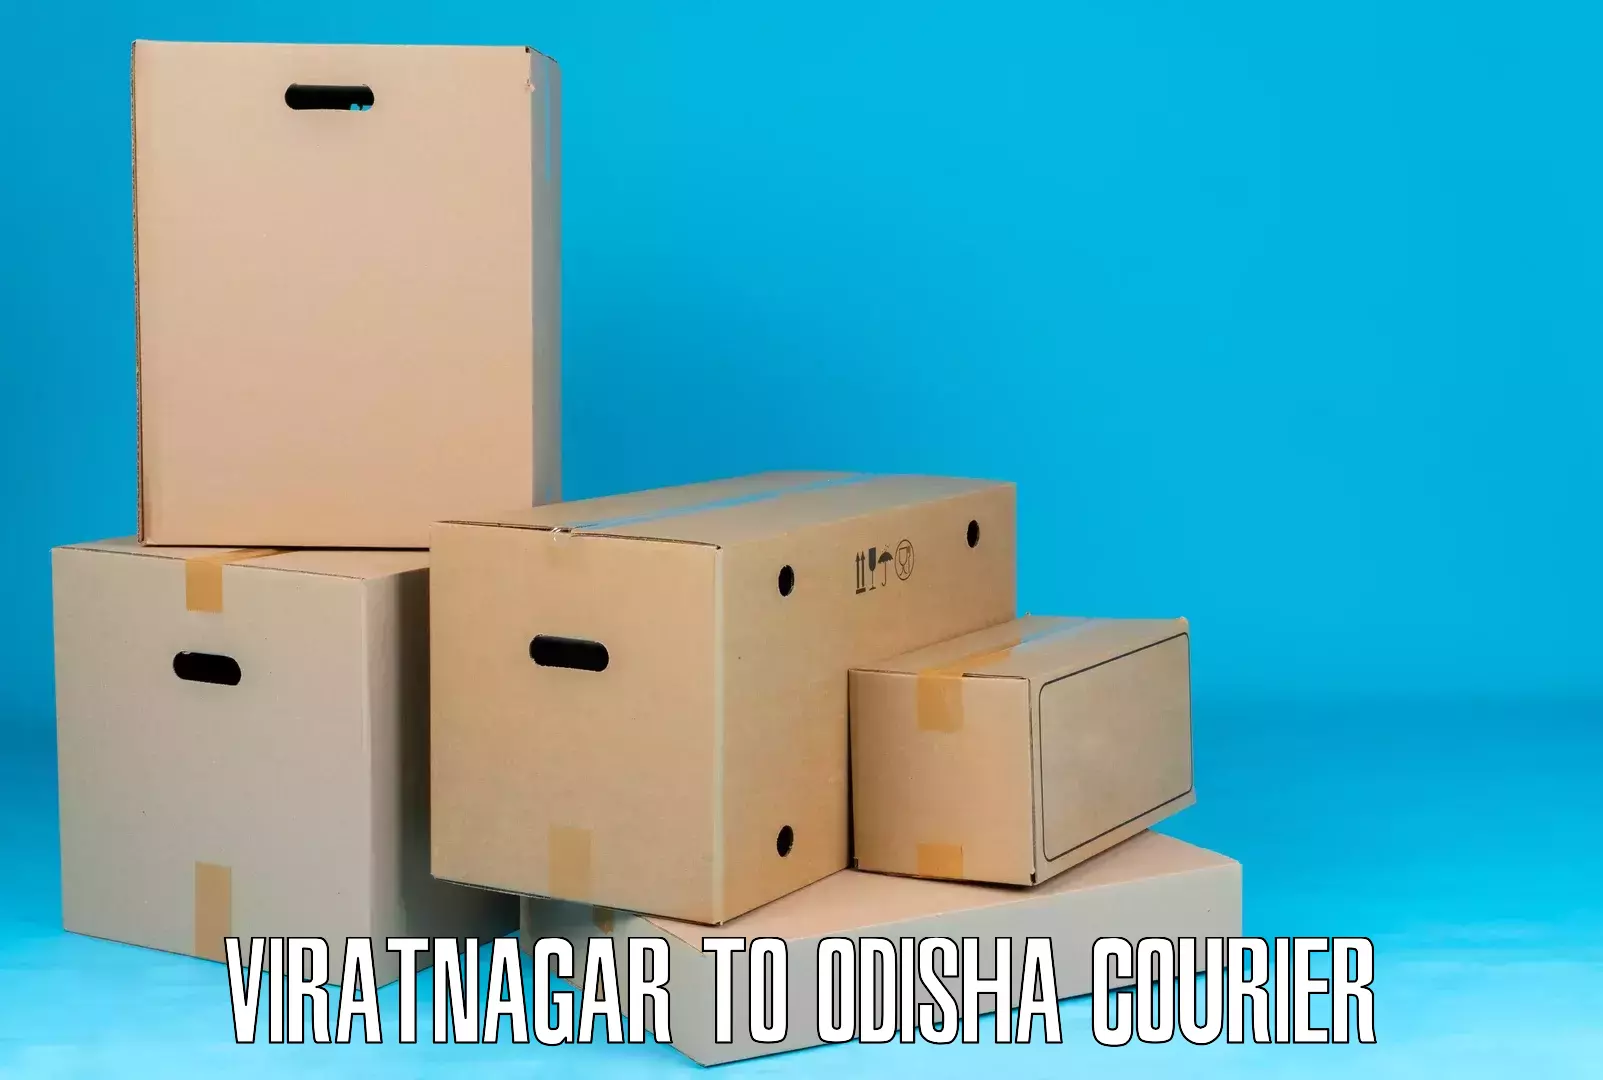 Quick dispatch service Viratnagar to Bhubaneswar